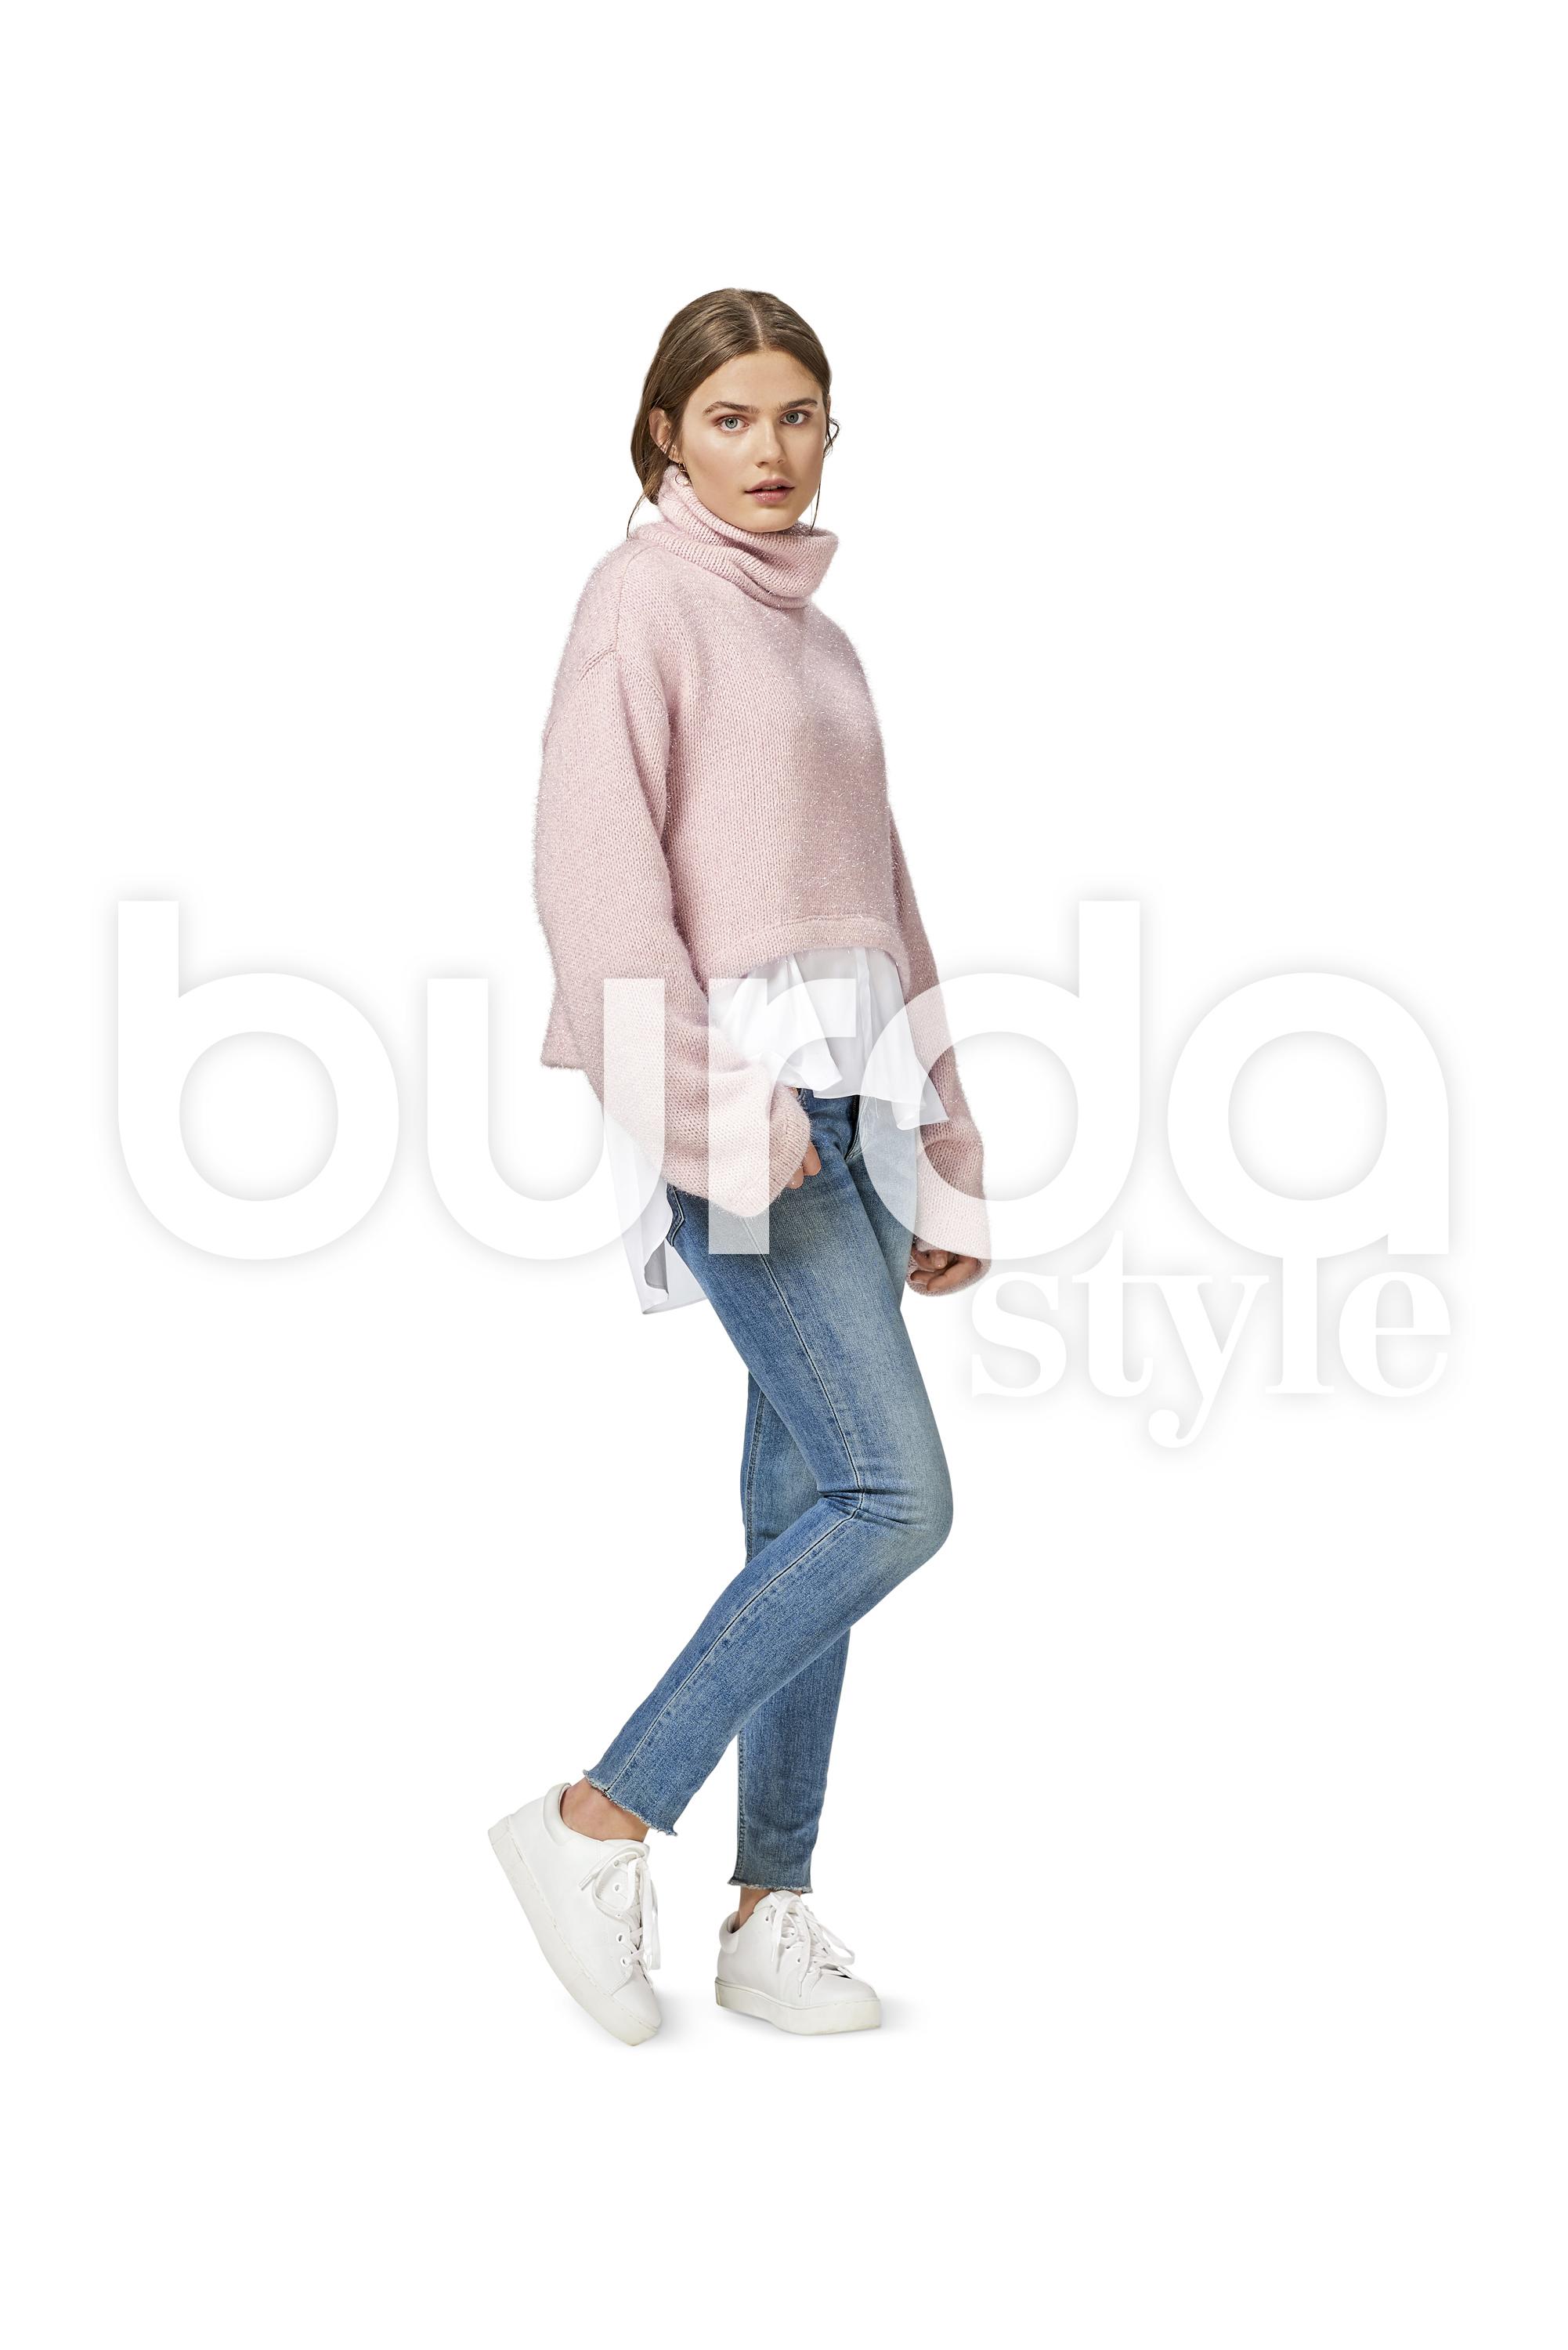 Burda B6476 Women's Pullover Collared Top